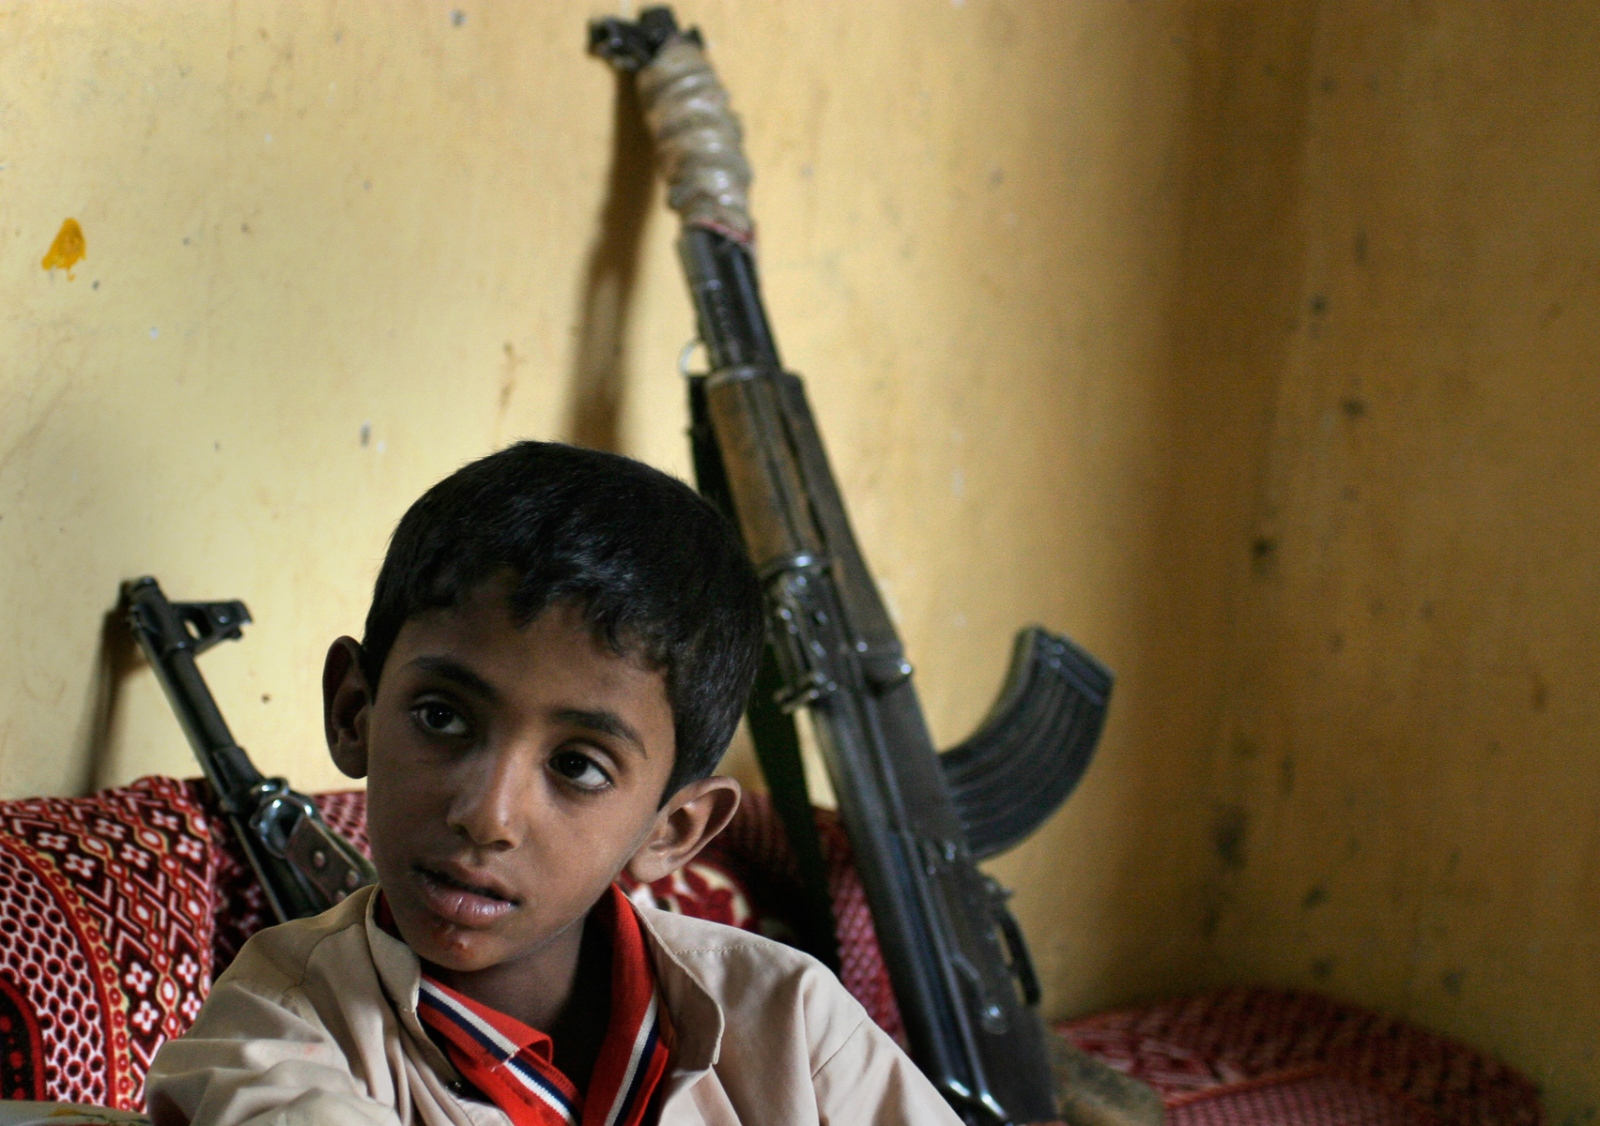 Yemen: Surviving Tribal Wars - A young boy listens as tribal leaders meet, chew khat,...